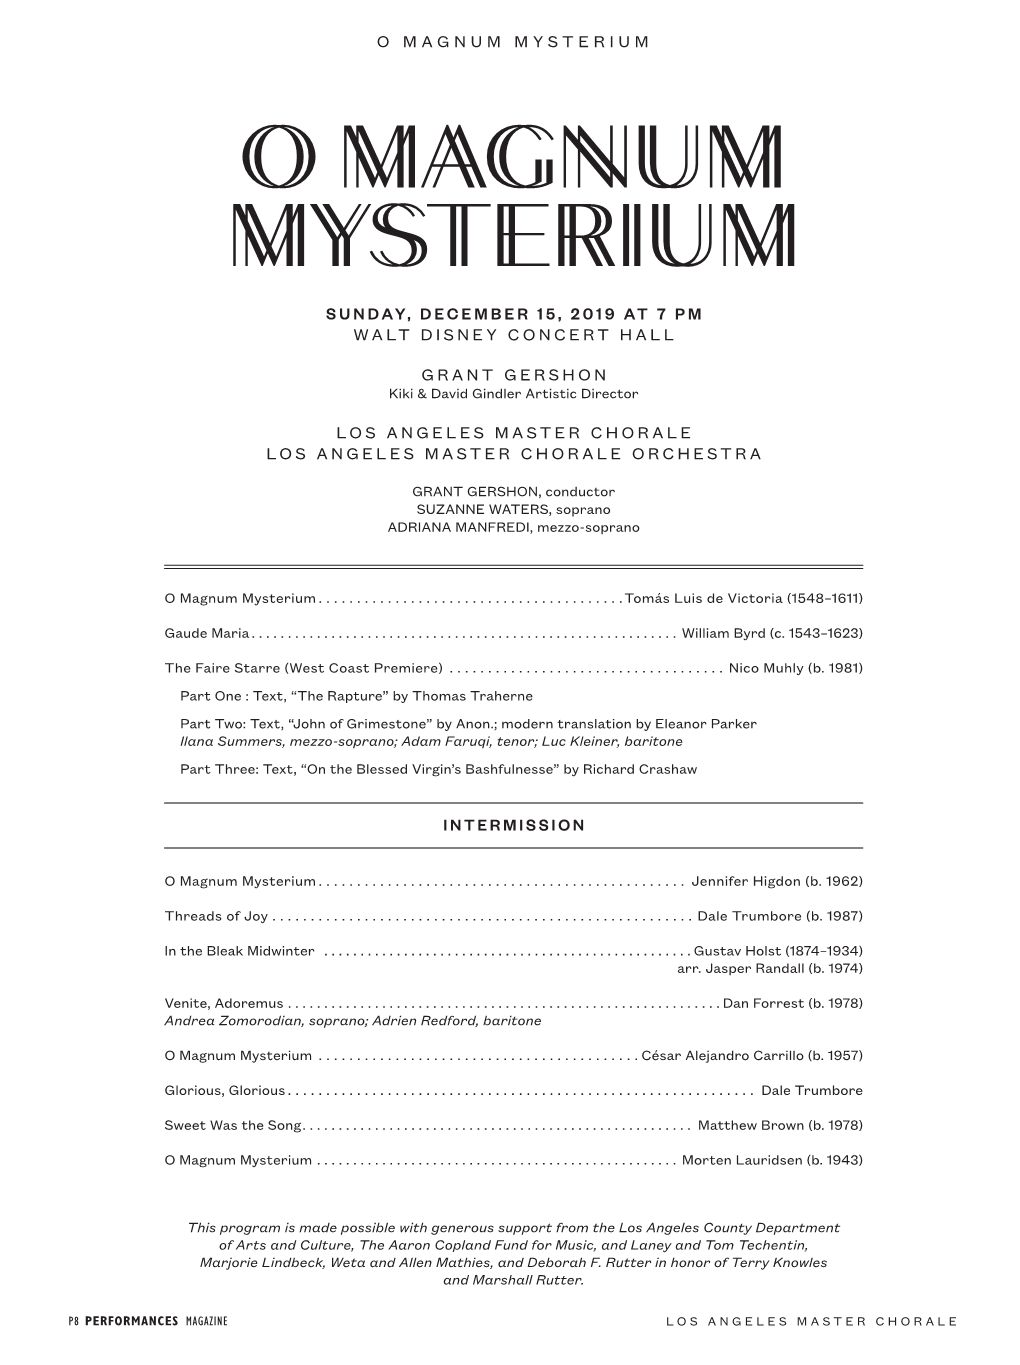 O MAGNUM MYSTERIUM O Magnum Mysterium SUNDAY, DECEMBER 15, 2019 at 7 PM WALT DISNEY CONCERT HALL